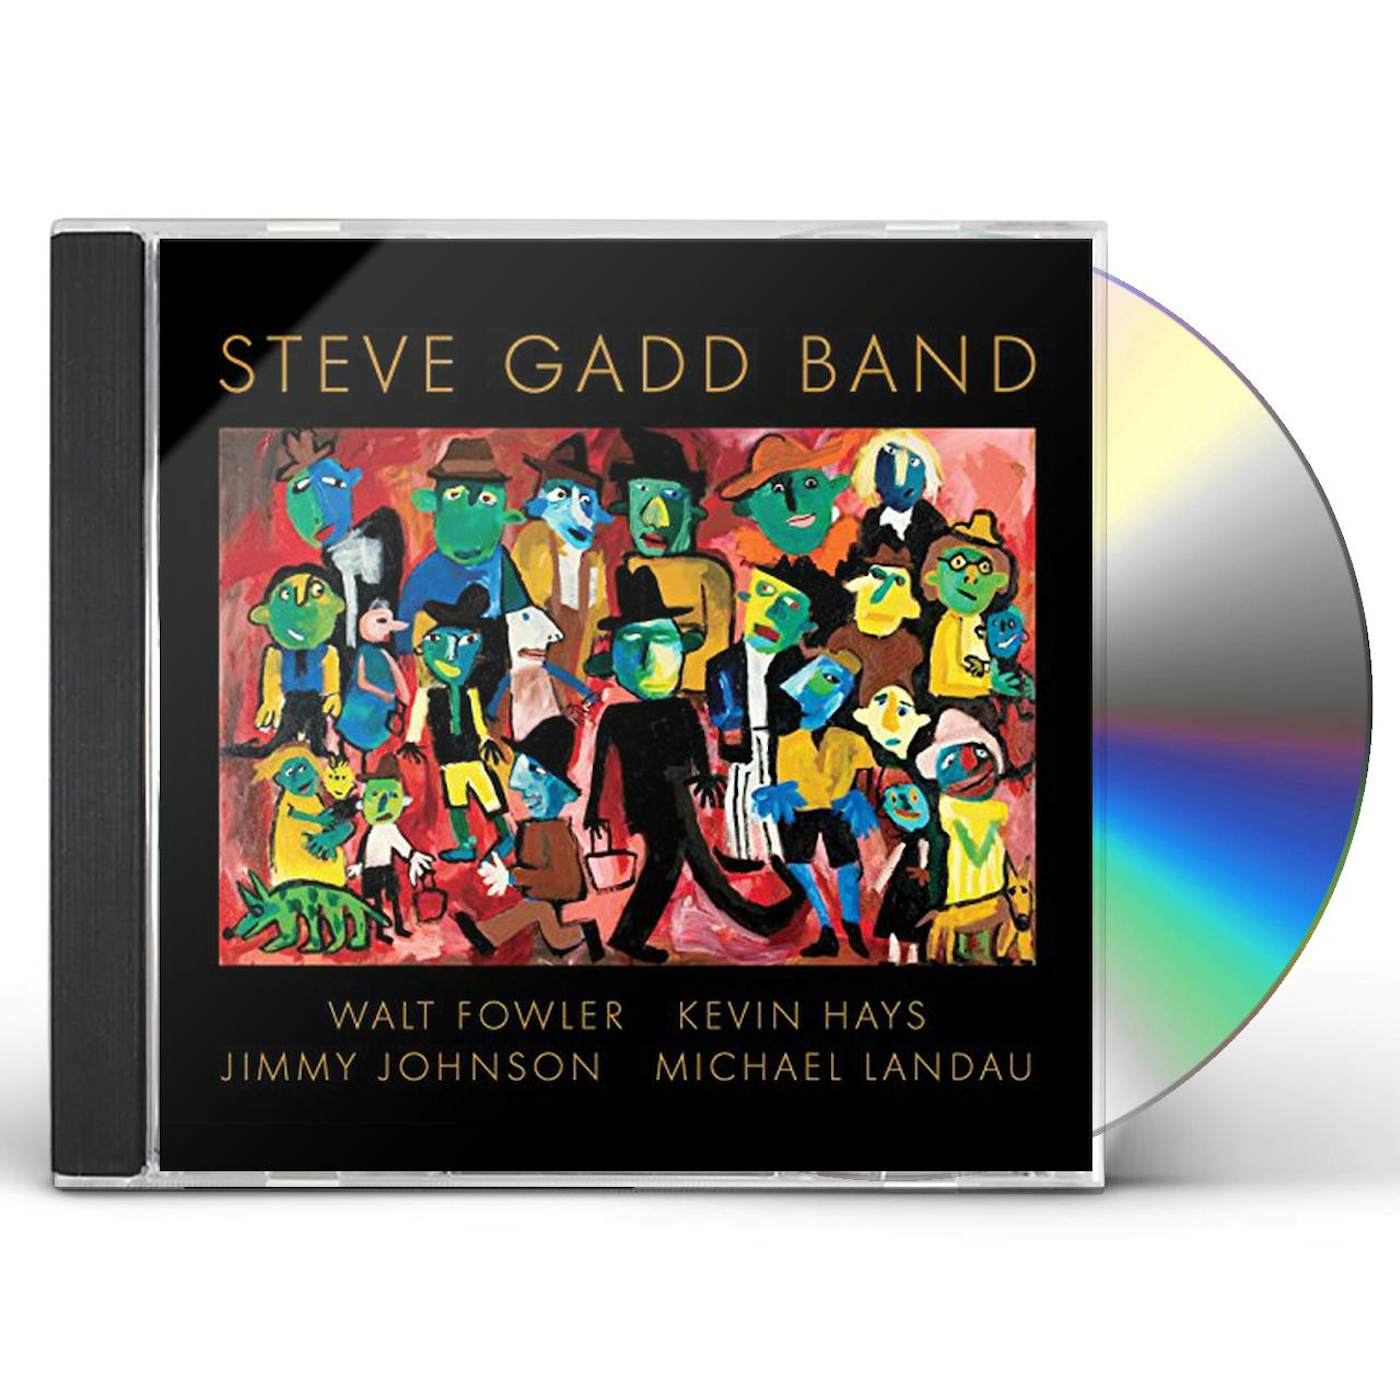 STEVE GADD BAND CD